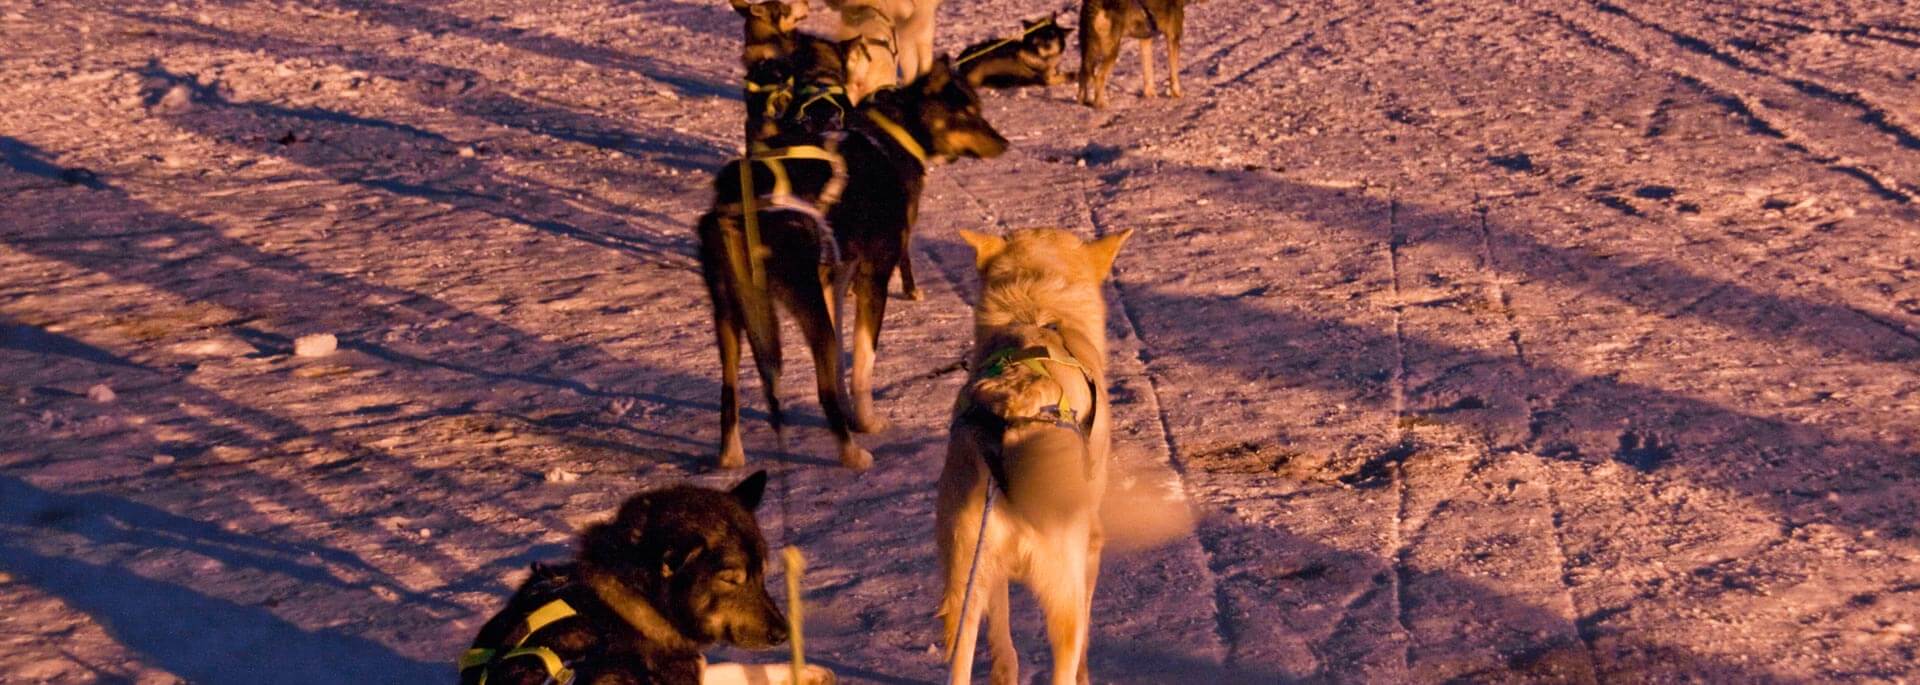 Reisetipp: Hundeschlittenfahrt in Nordnorwegen